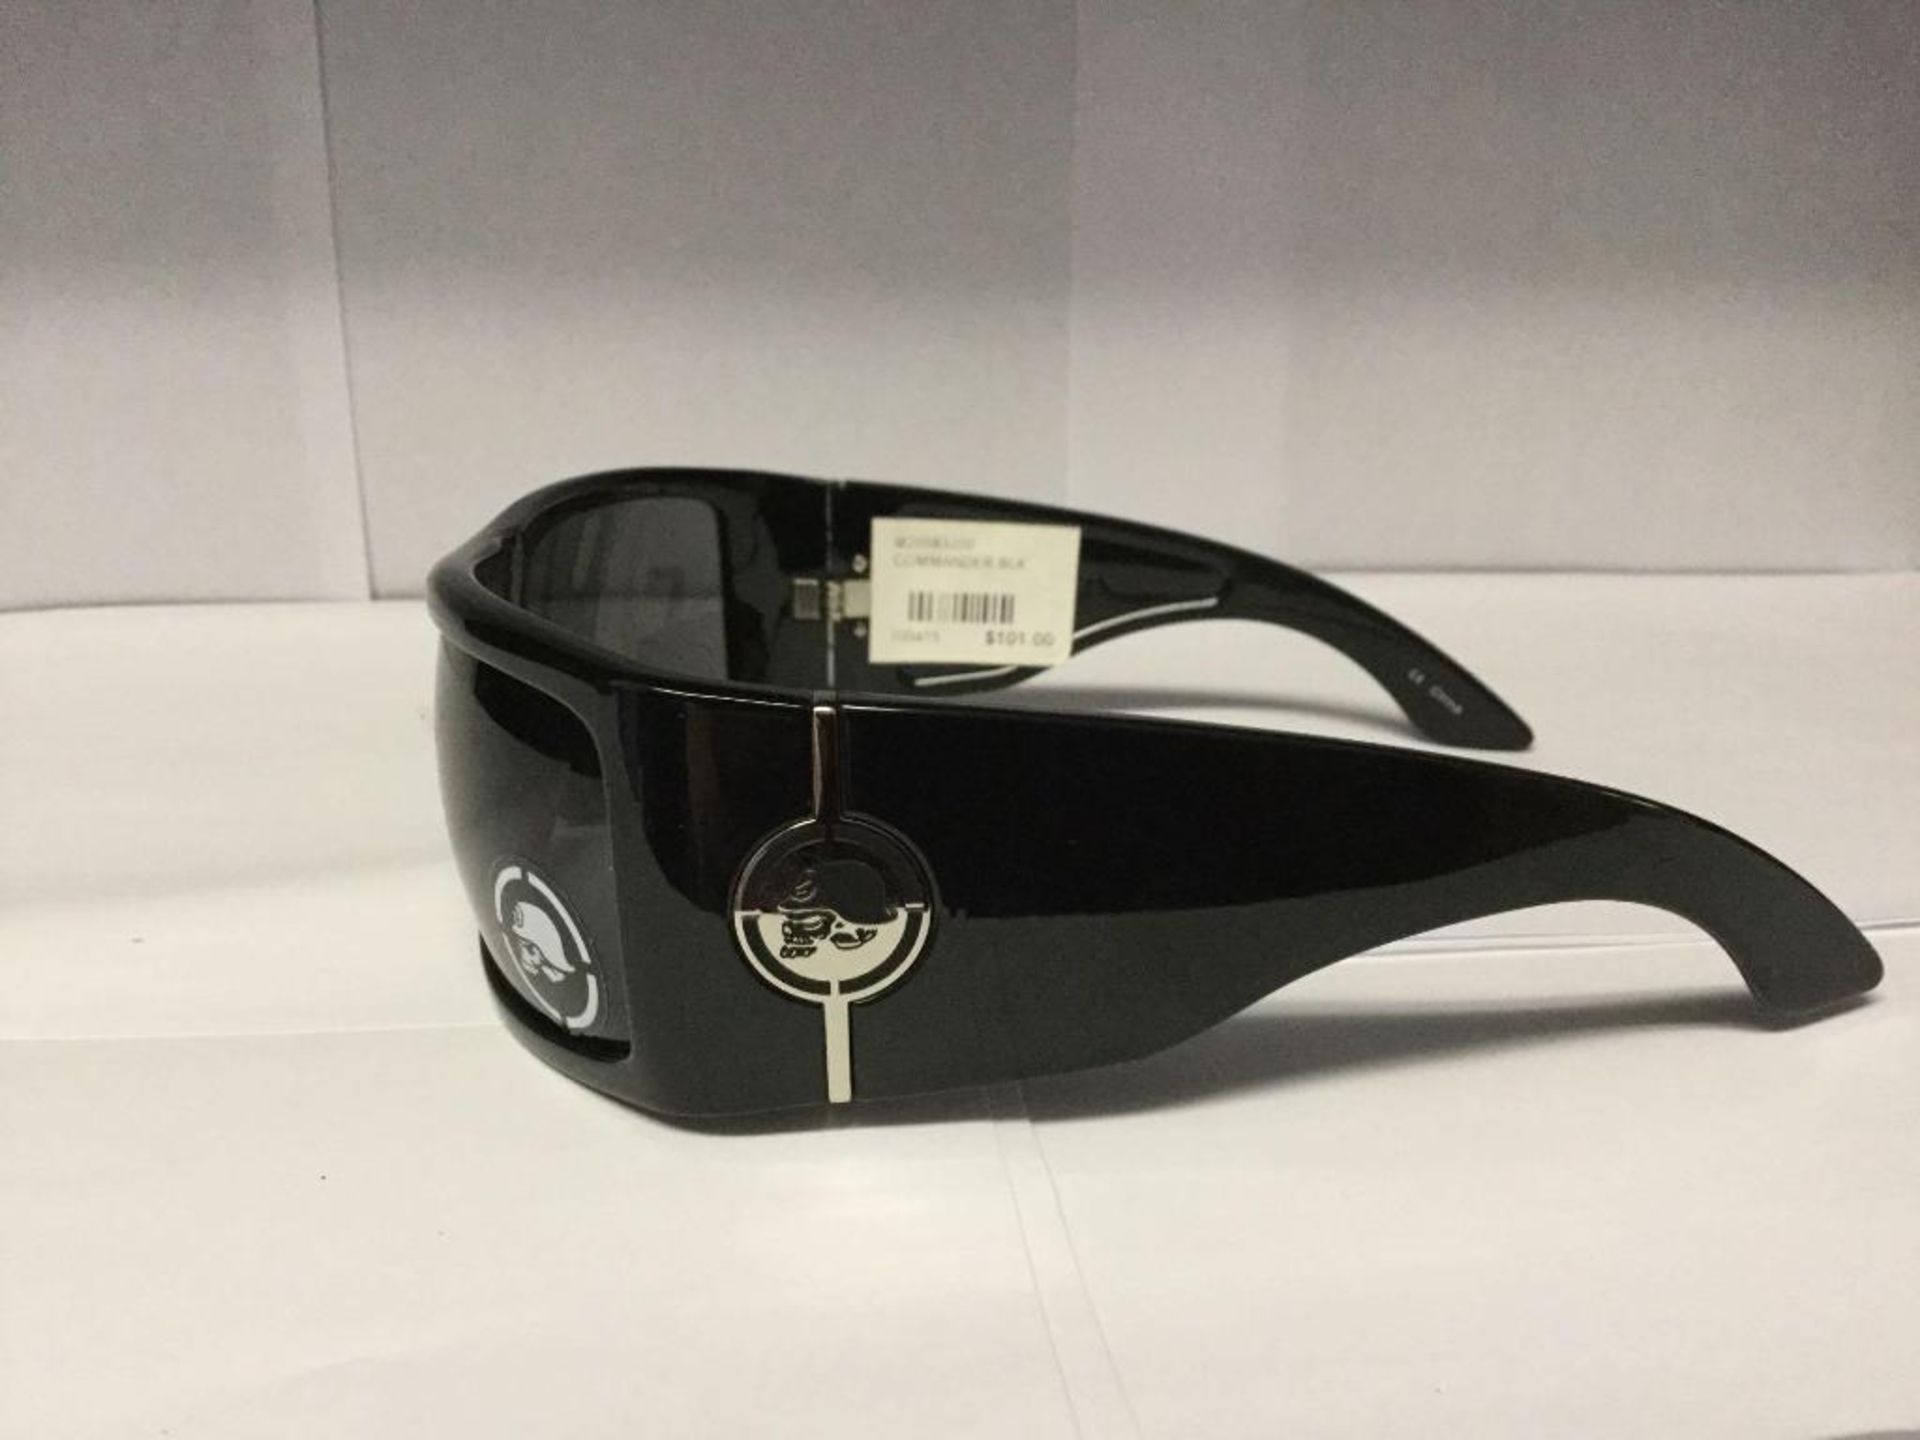 Metal Mulisha Sunglasses with Box Value $101 - Image 2 of 3